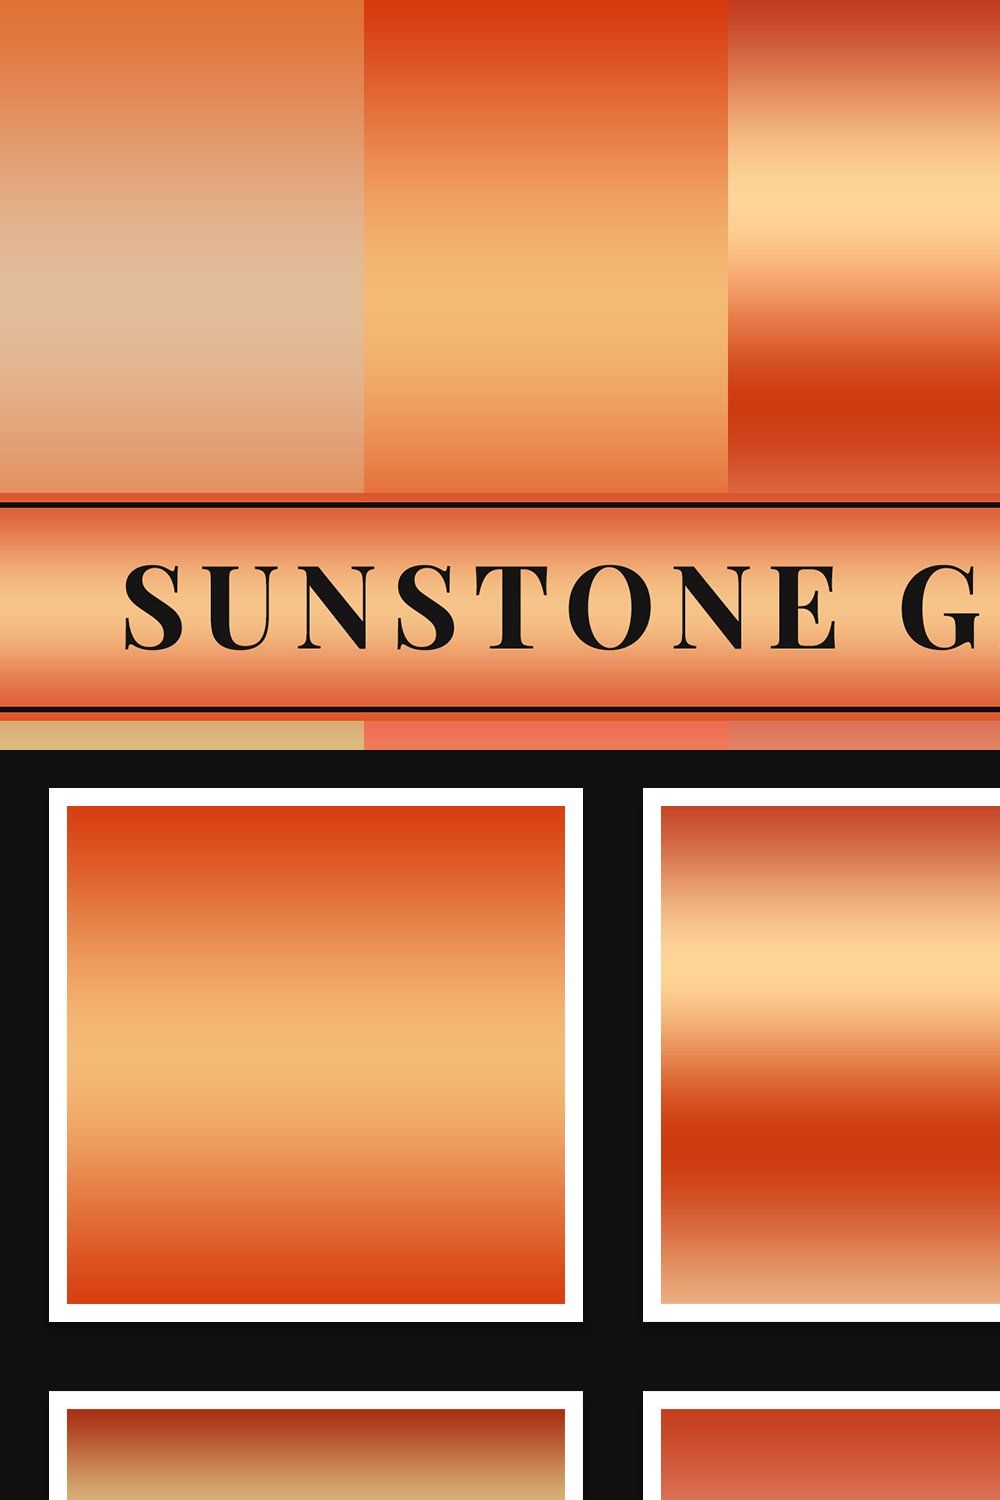 Sunstone Gradients pinterest preview image.